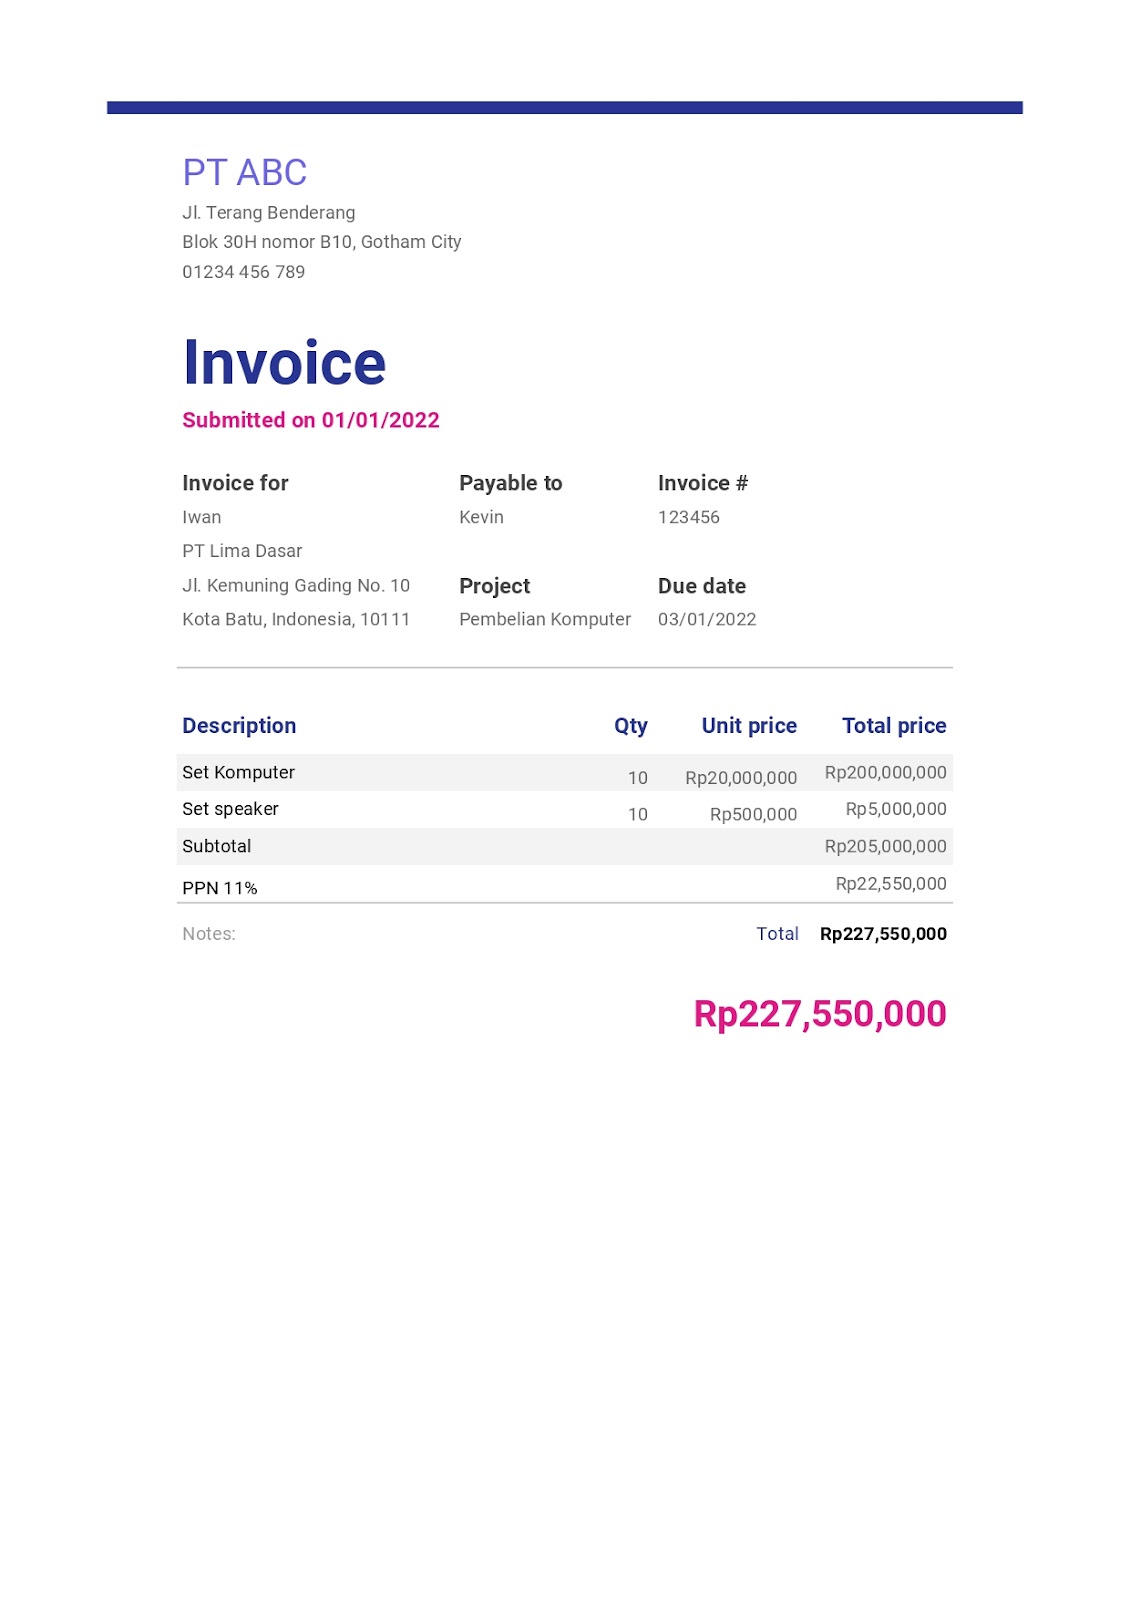 Contoh invoice pembayaran 1